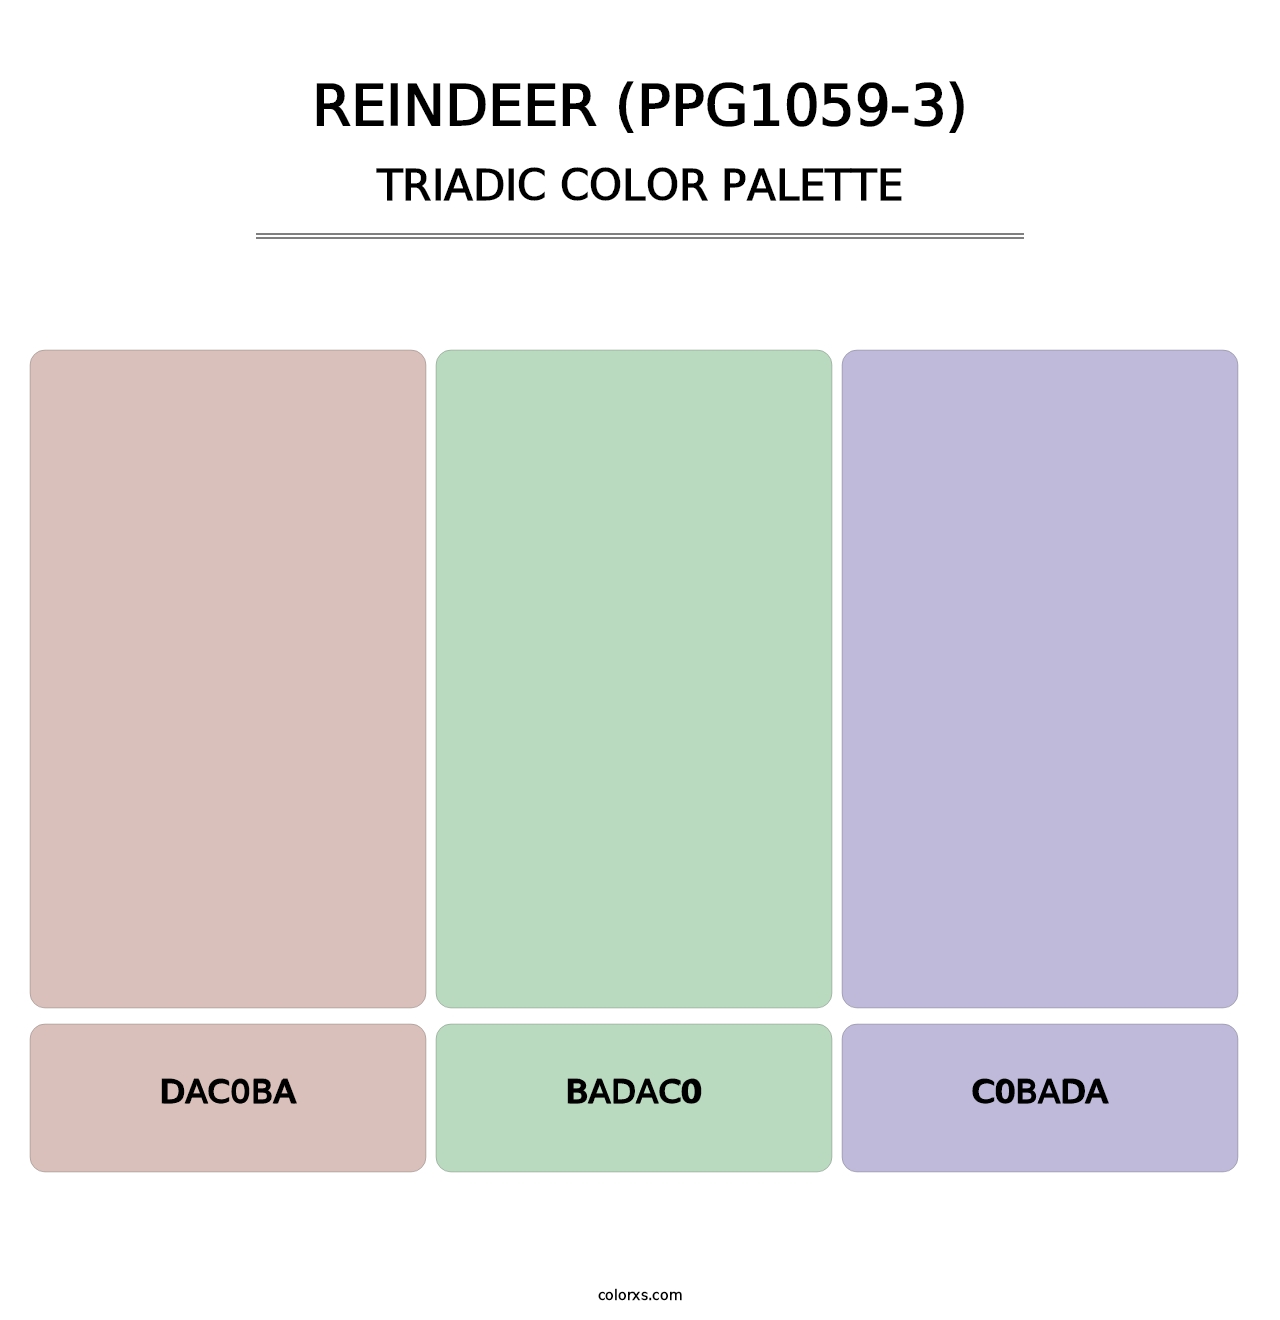 Reindeer (PPG1059-3) - Triadic Color Palette